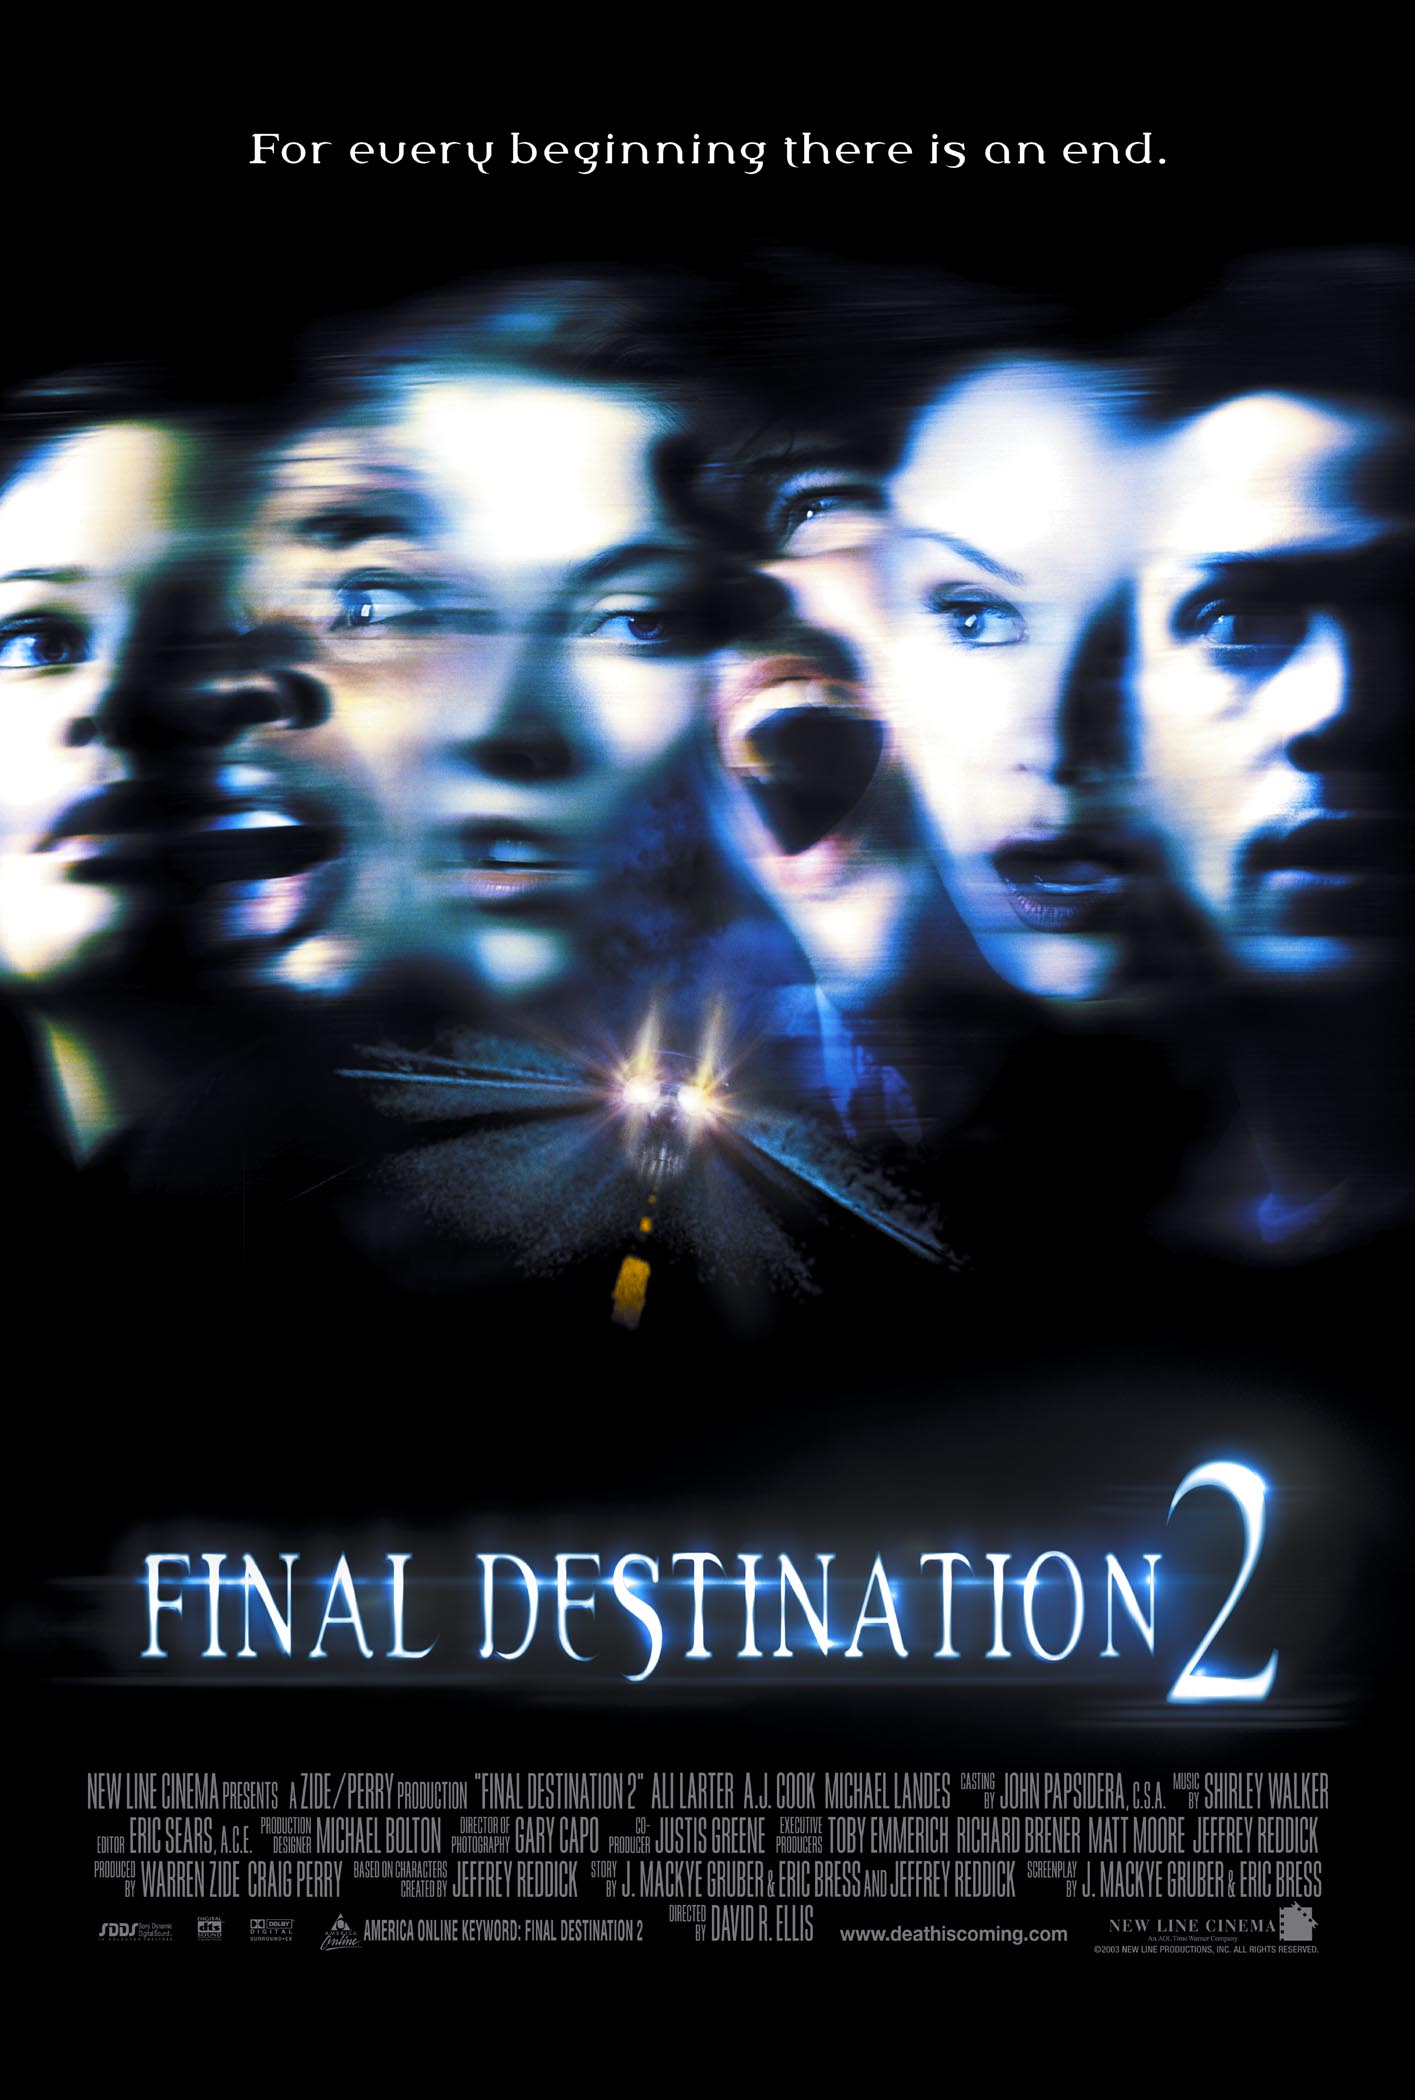 Final destination 1 shooting script with original ending